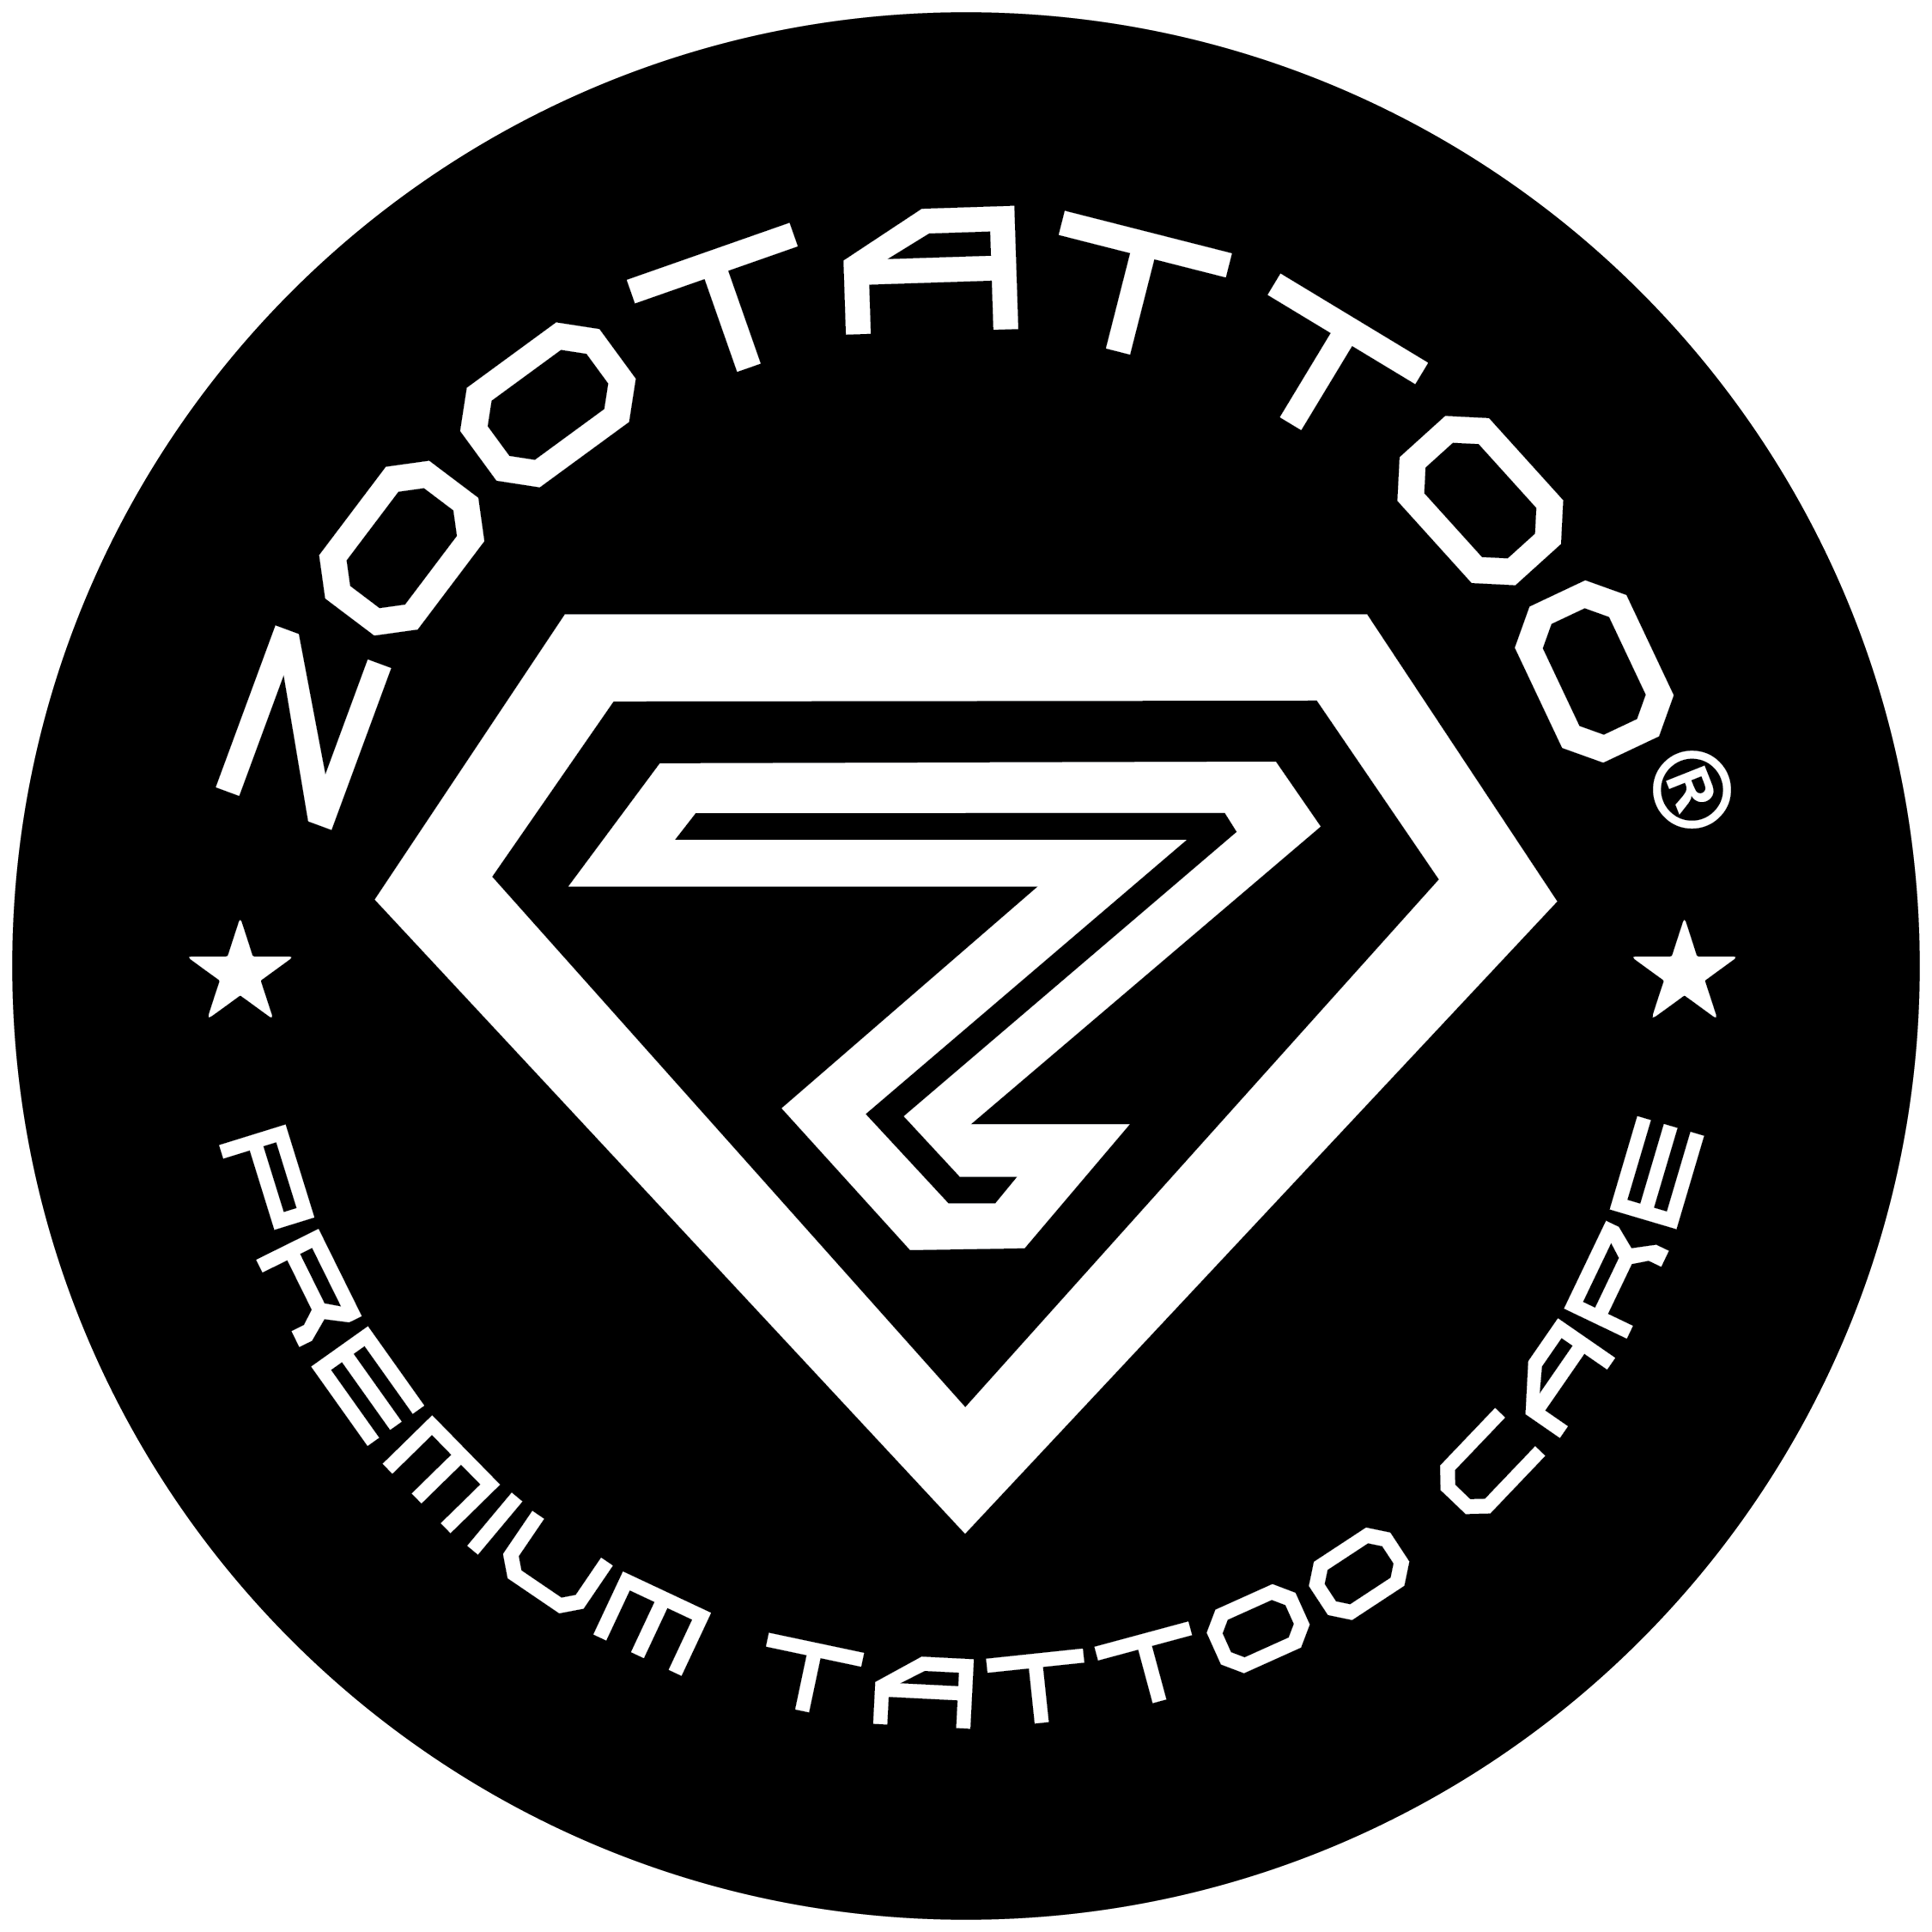 Ritchie Ruiz | SR. Another monogram project for the logo of a tattoo artist  @sal_reyes ⚡️ thank you! . . . #monogram #logo #design #logodesigner #t...  | Instagram